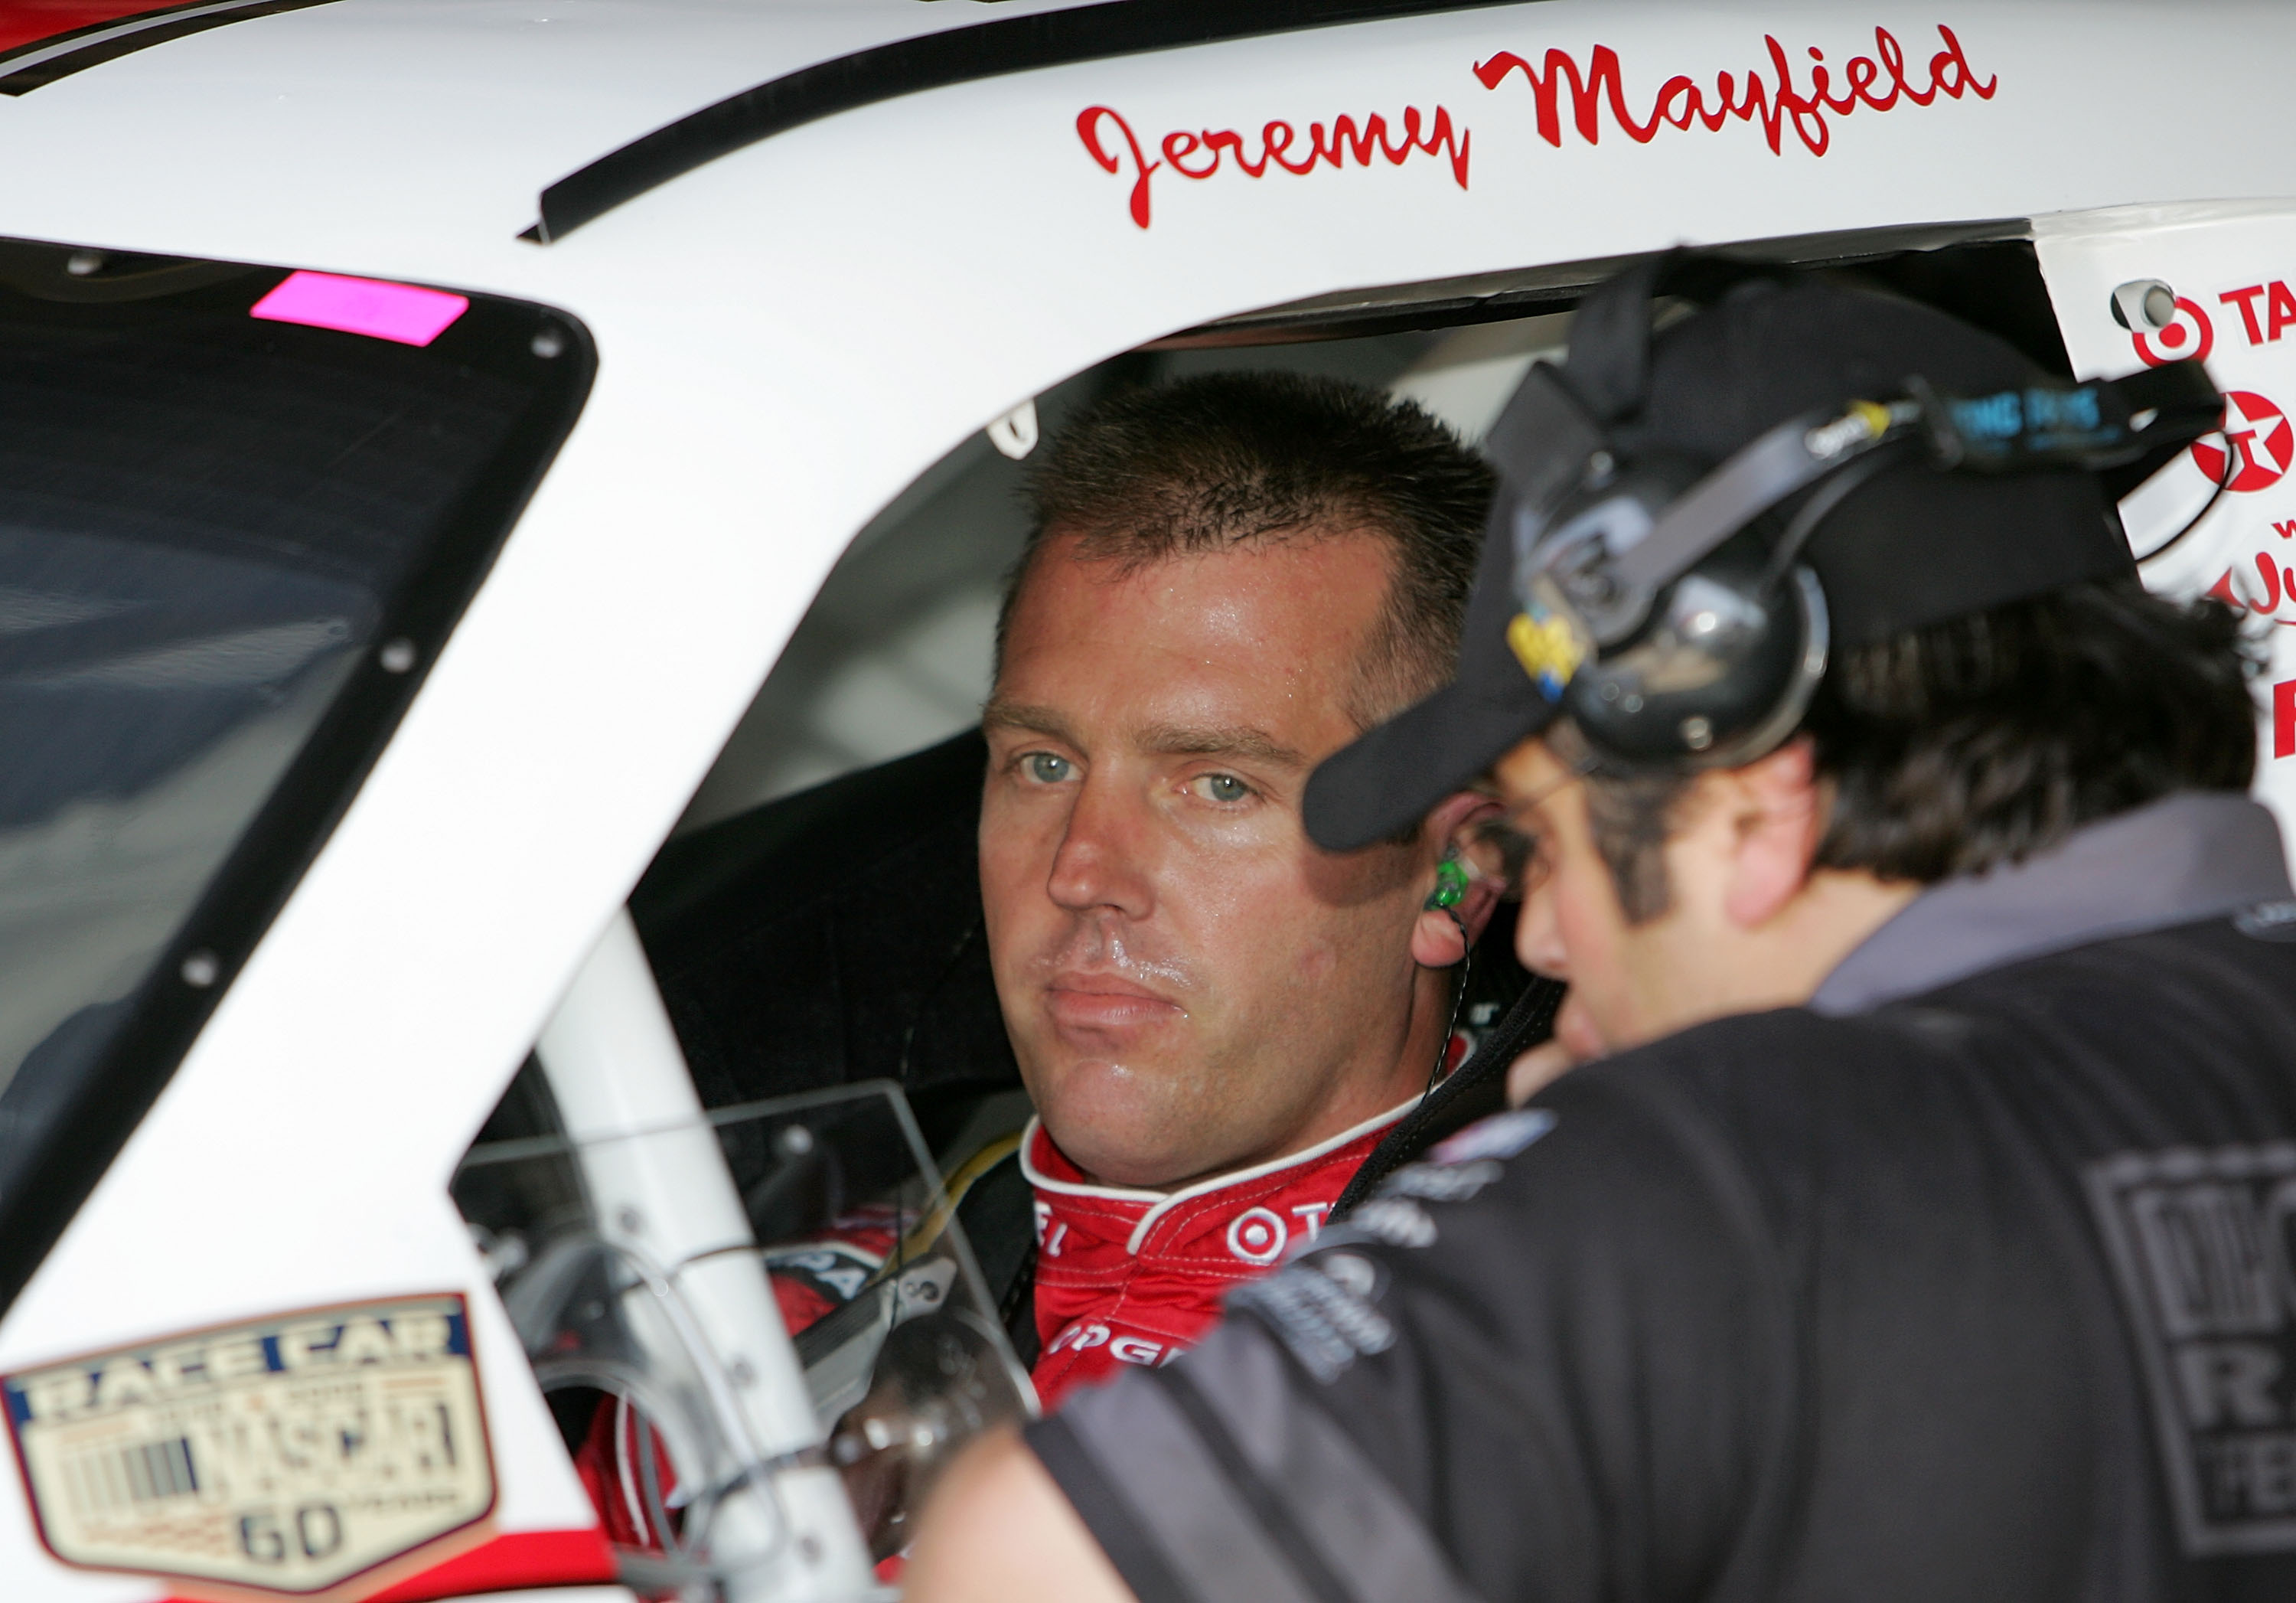 Jeremy Mayfield's NASCAR career turned upside down in 2009.